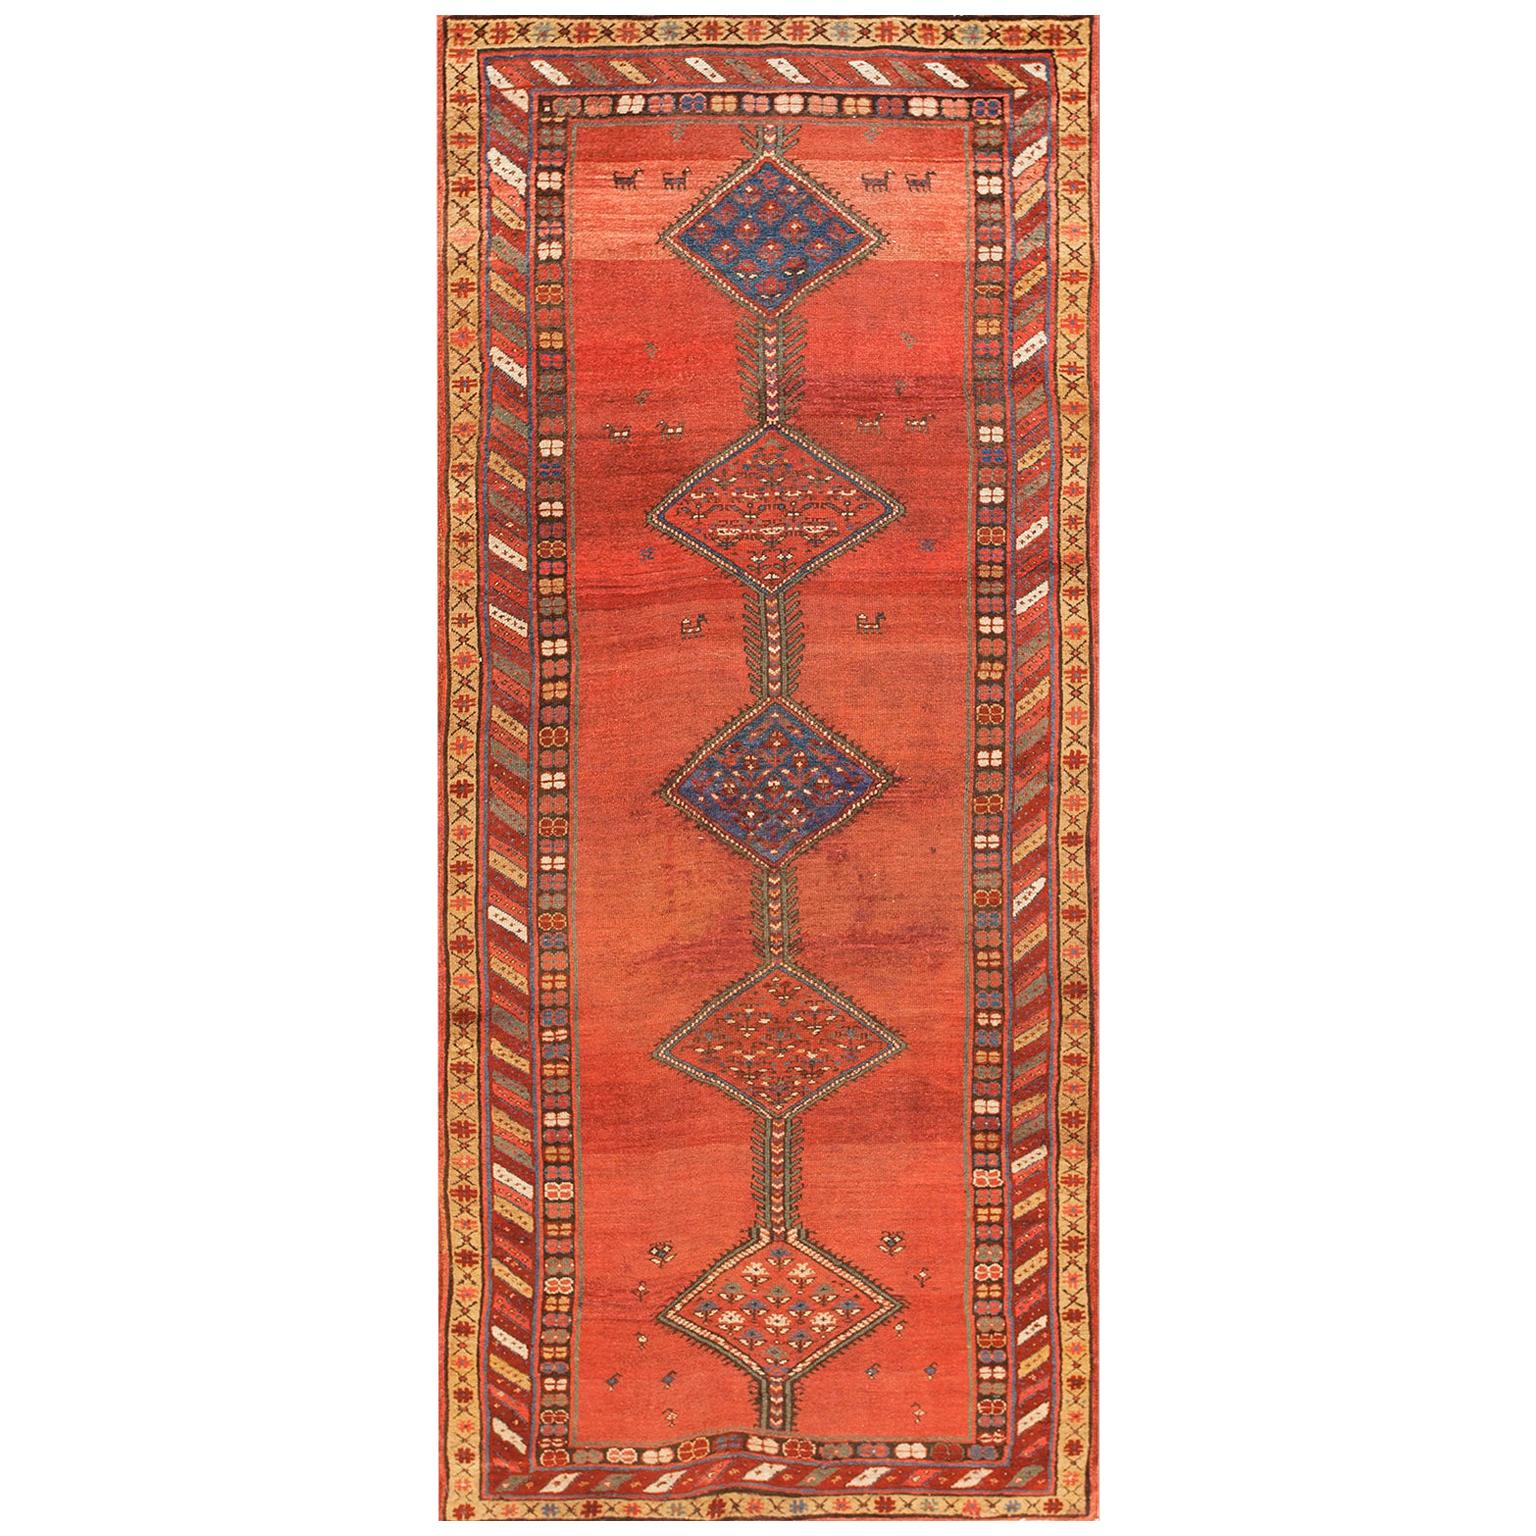 Late 19th Century N.W. Persian Carpet ( 3'9" x 8'10" - 115 x 270 )